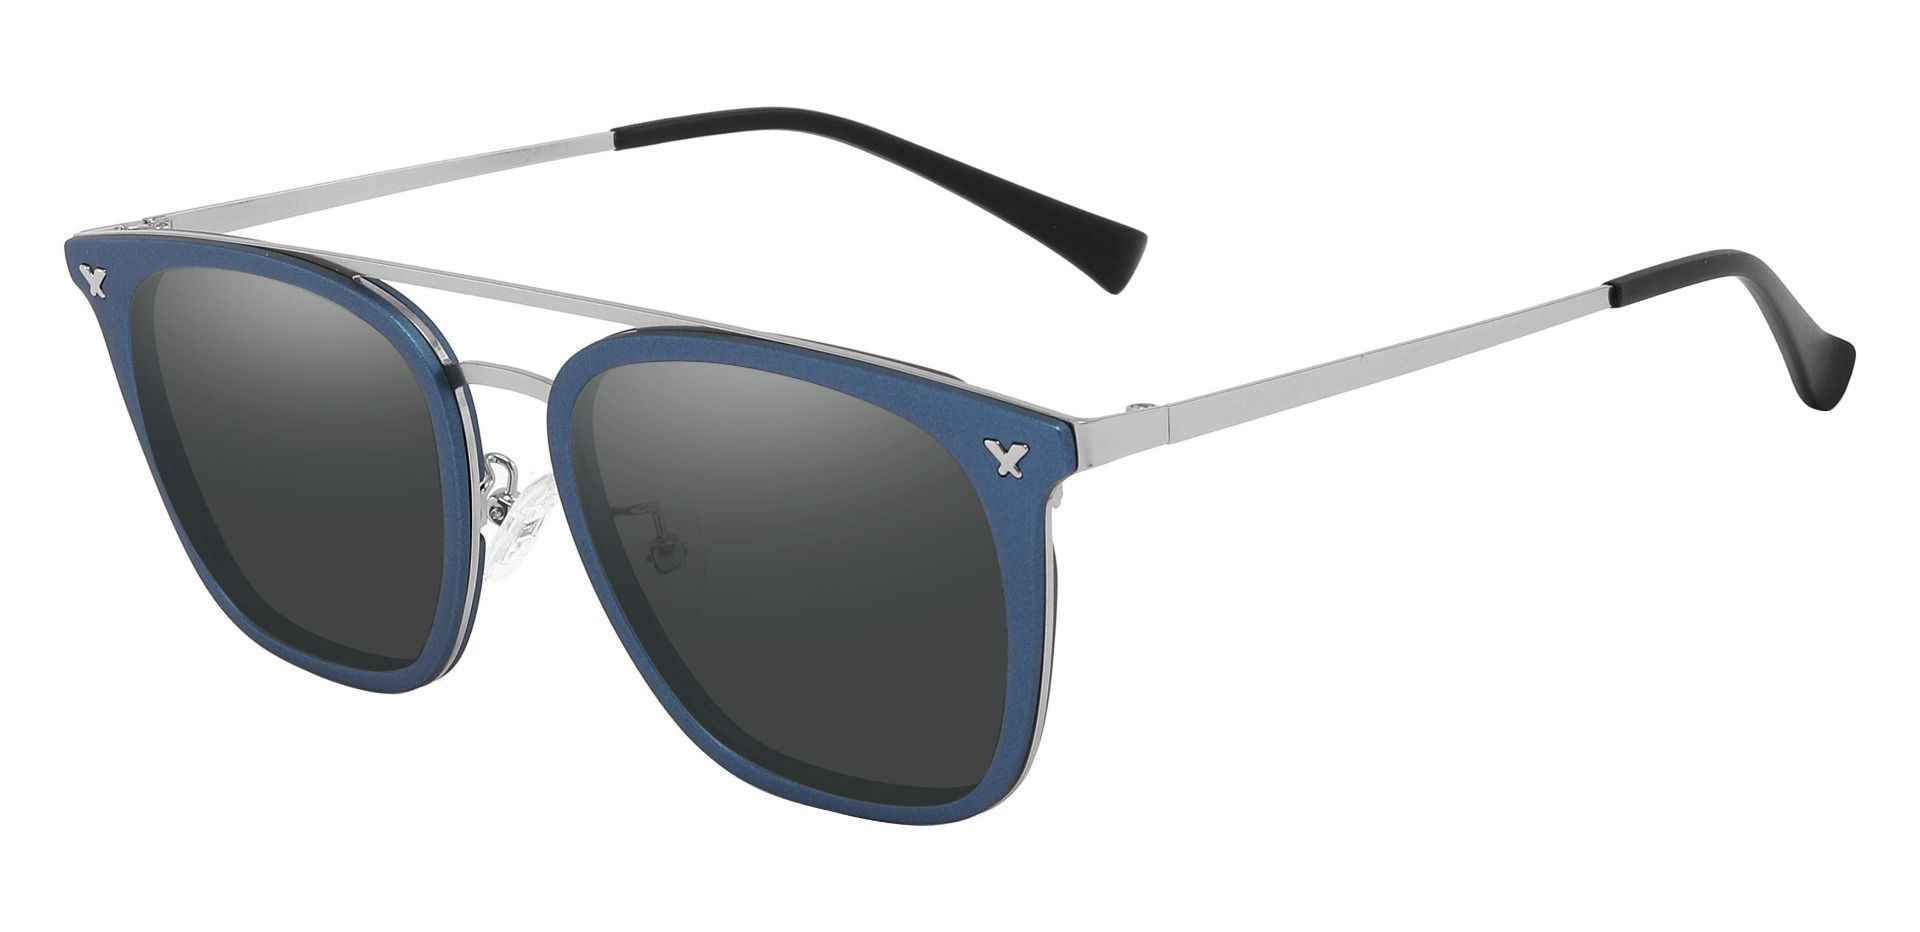 Francois Aviator Prescription Sunglasses - Blue Frame With Gray Lenses